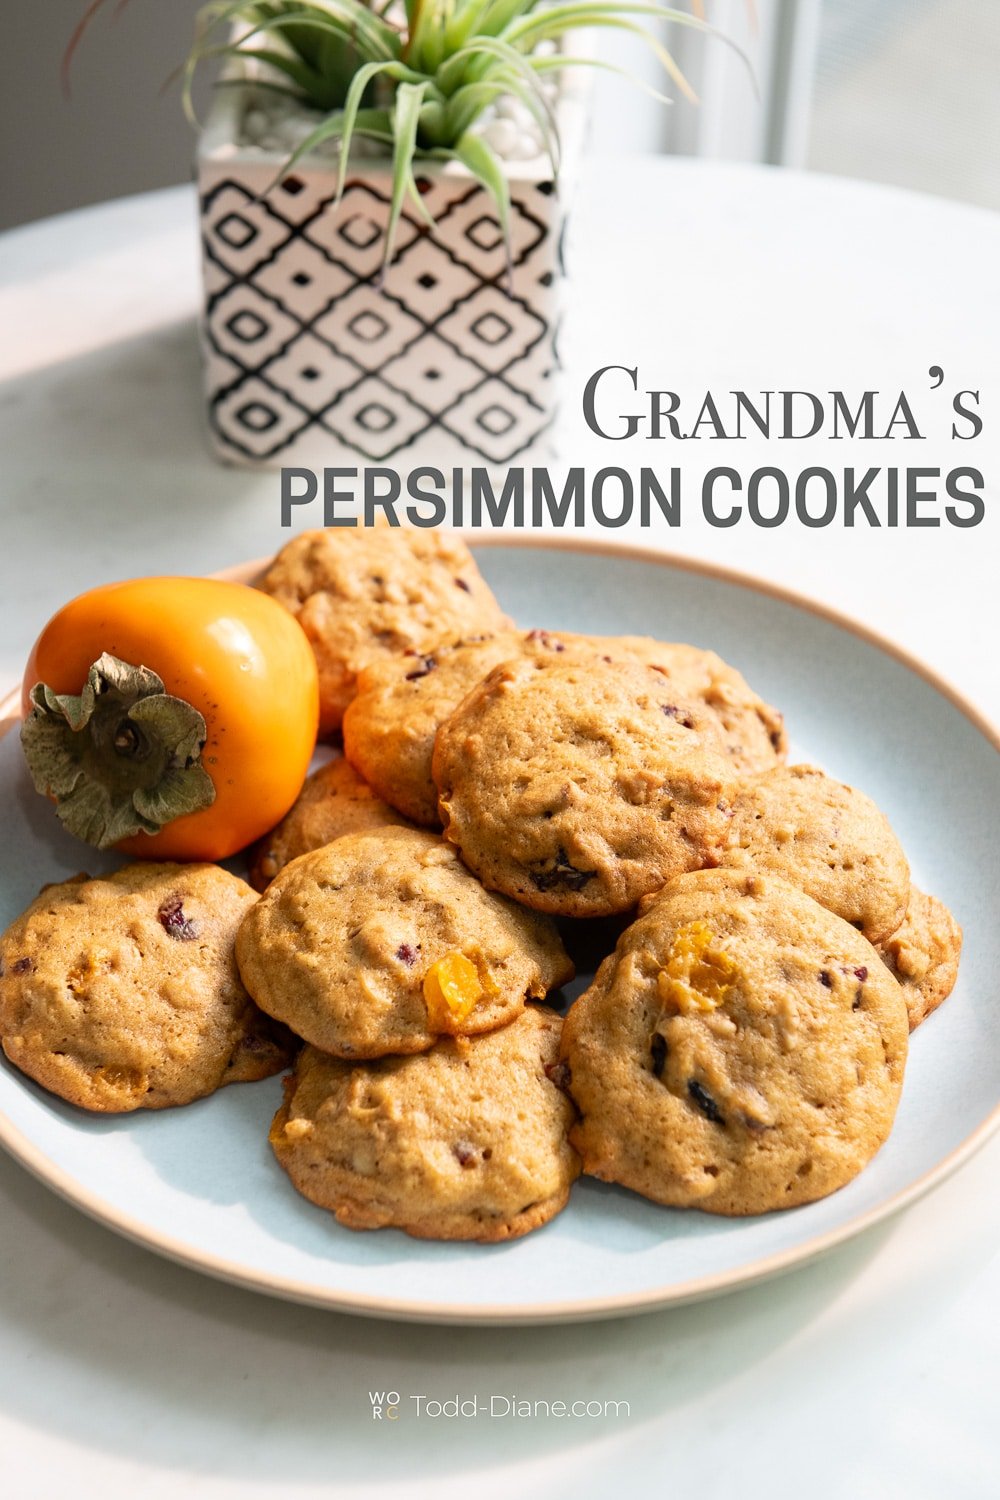 https://whiteonricecouple.com/recipe/images/Grandmas-Persimmon-Cookies-WhiteOnRiceCouple-1.jpg